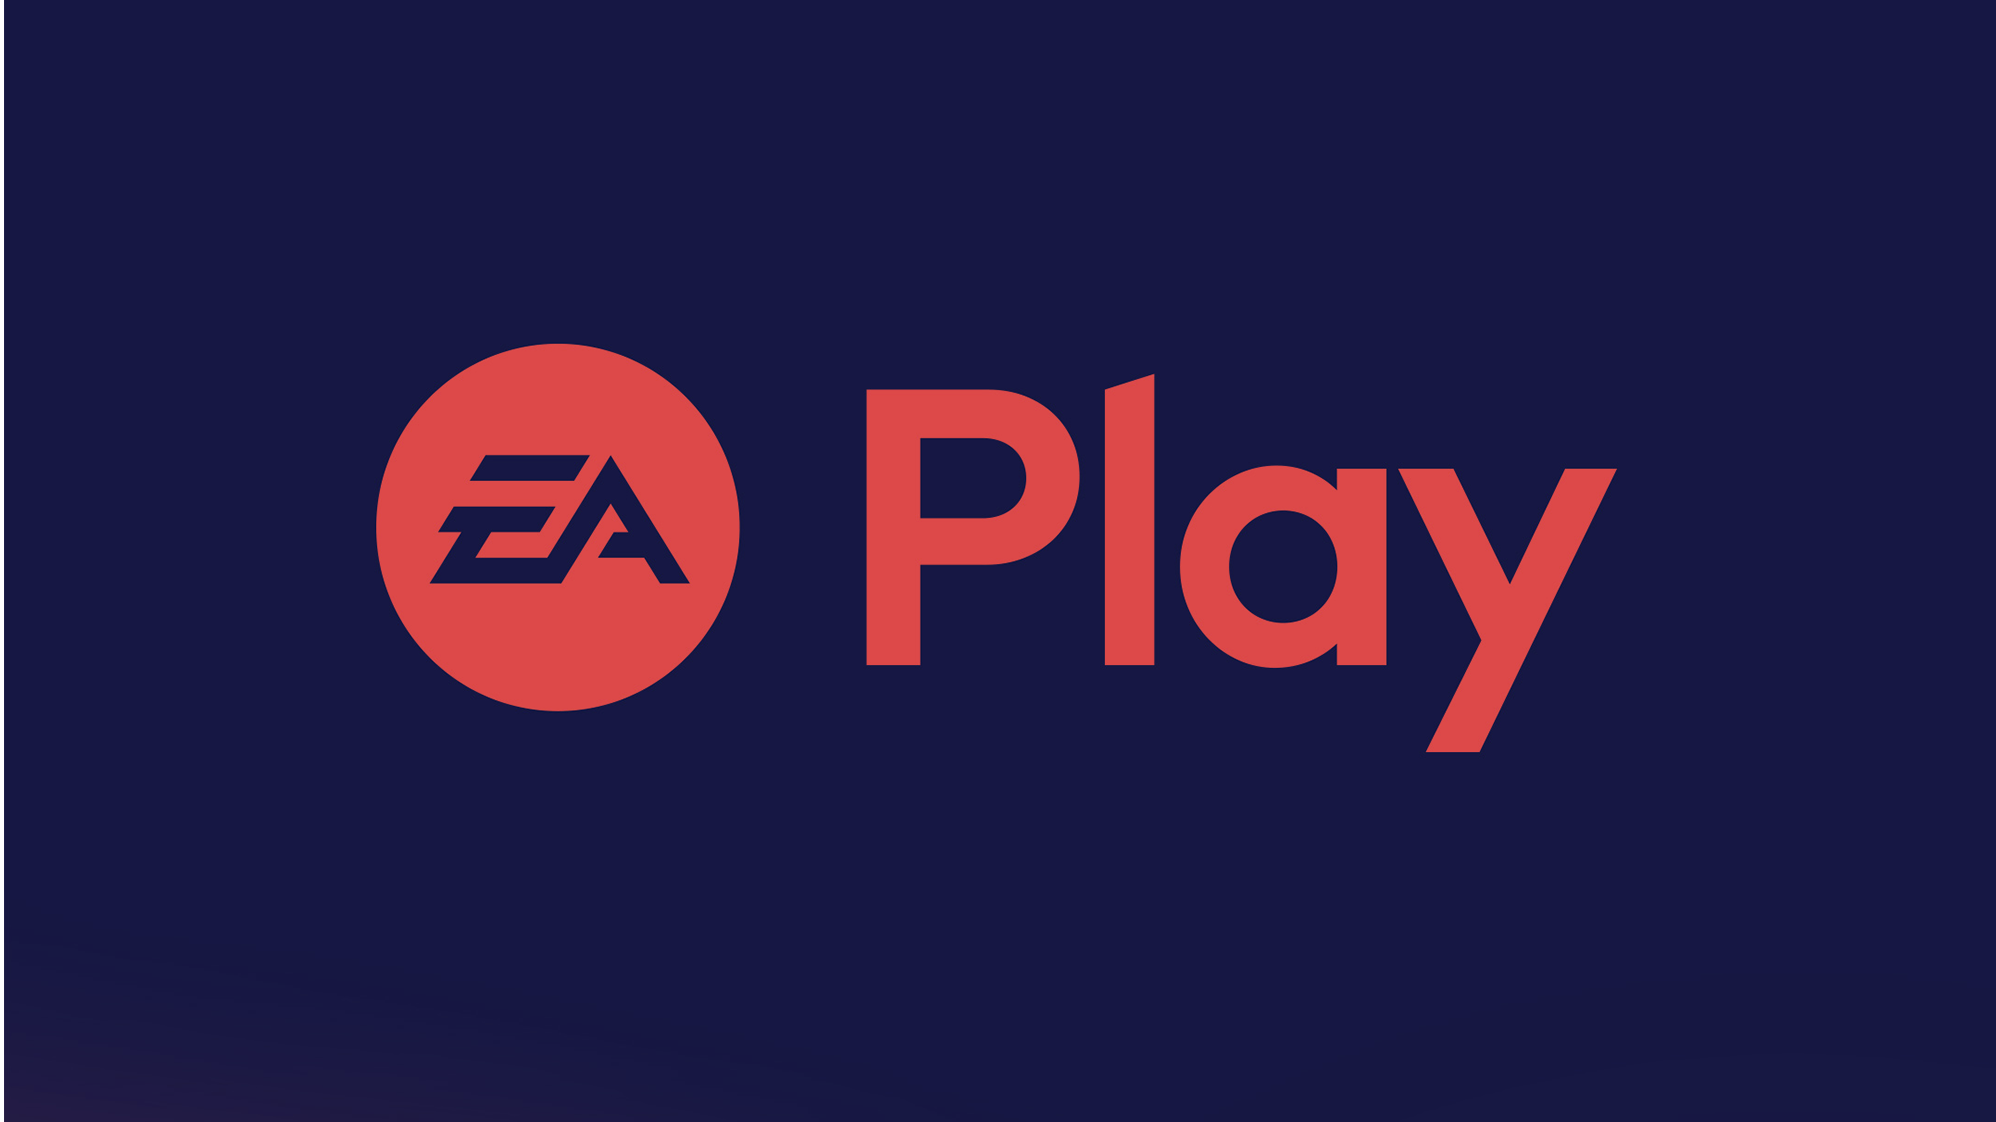 FIFA 23 Crossplay: PlayStation, Xbox And PC Crossplatform…